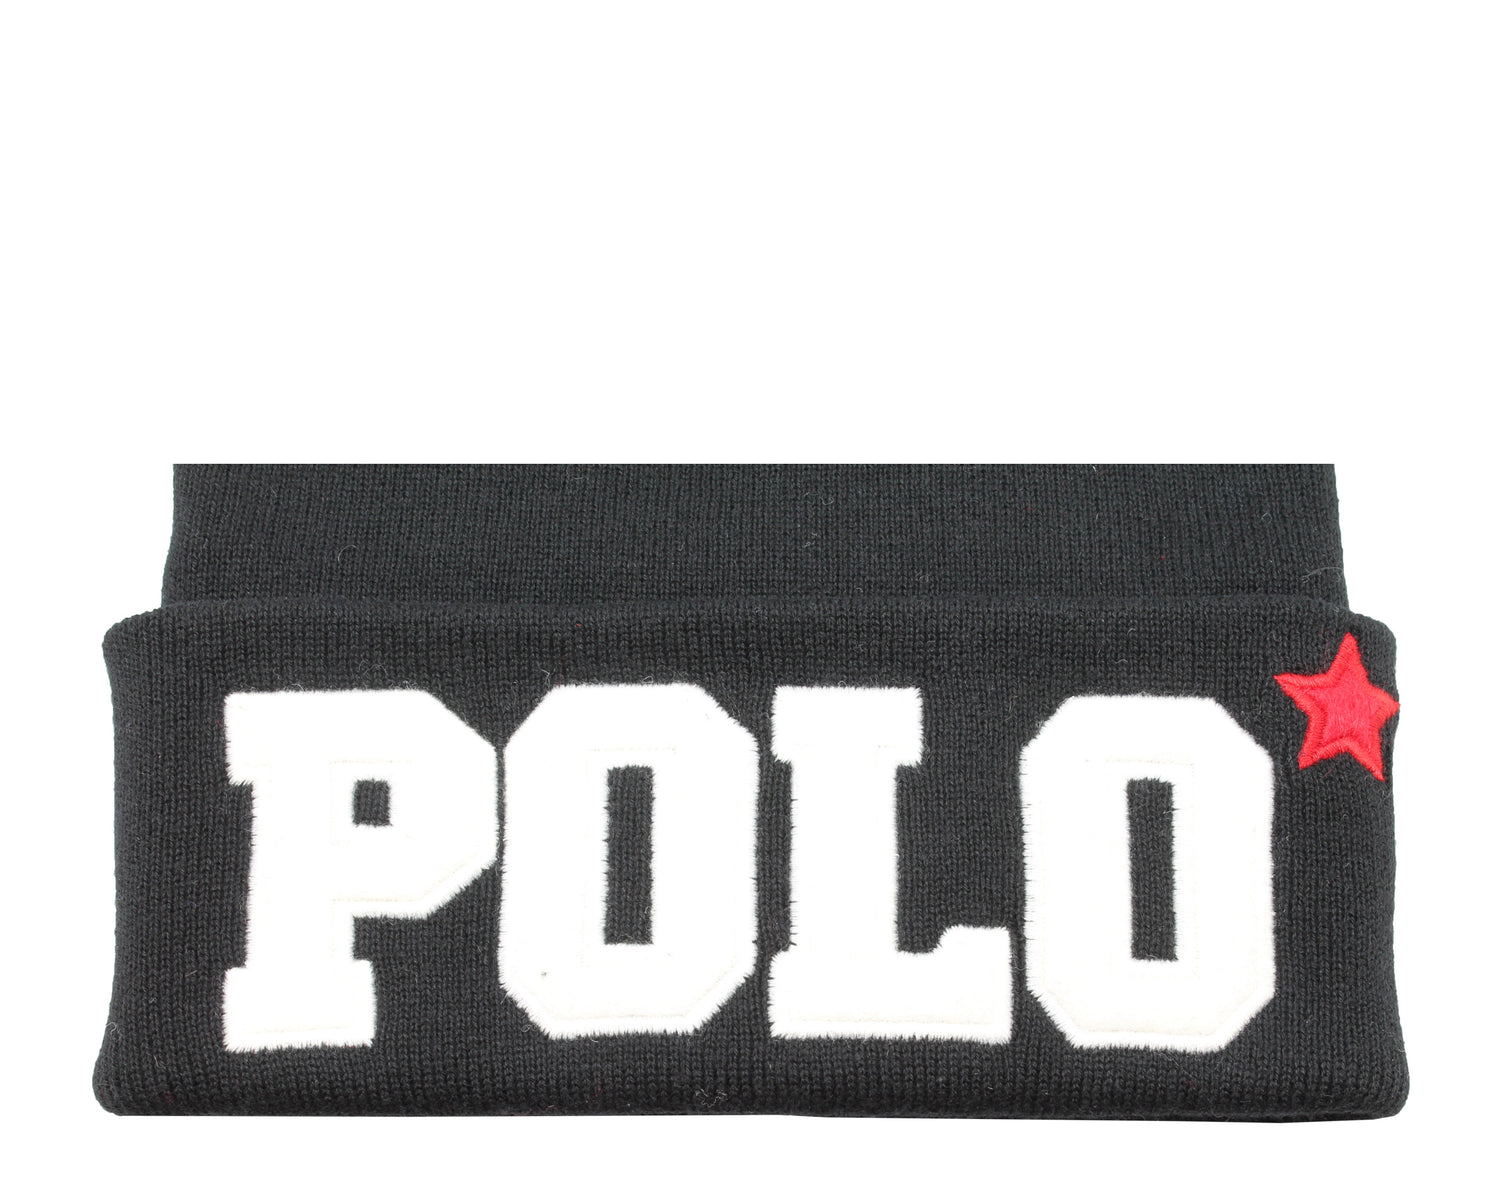 Polo Ralph Lauren USA One Star Varsity Knit Hat